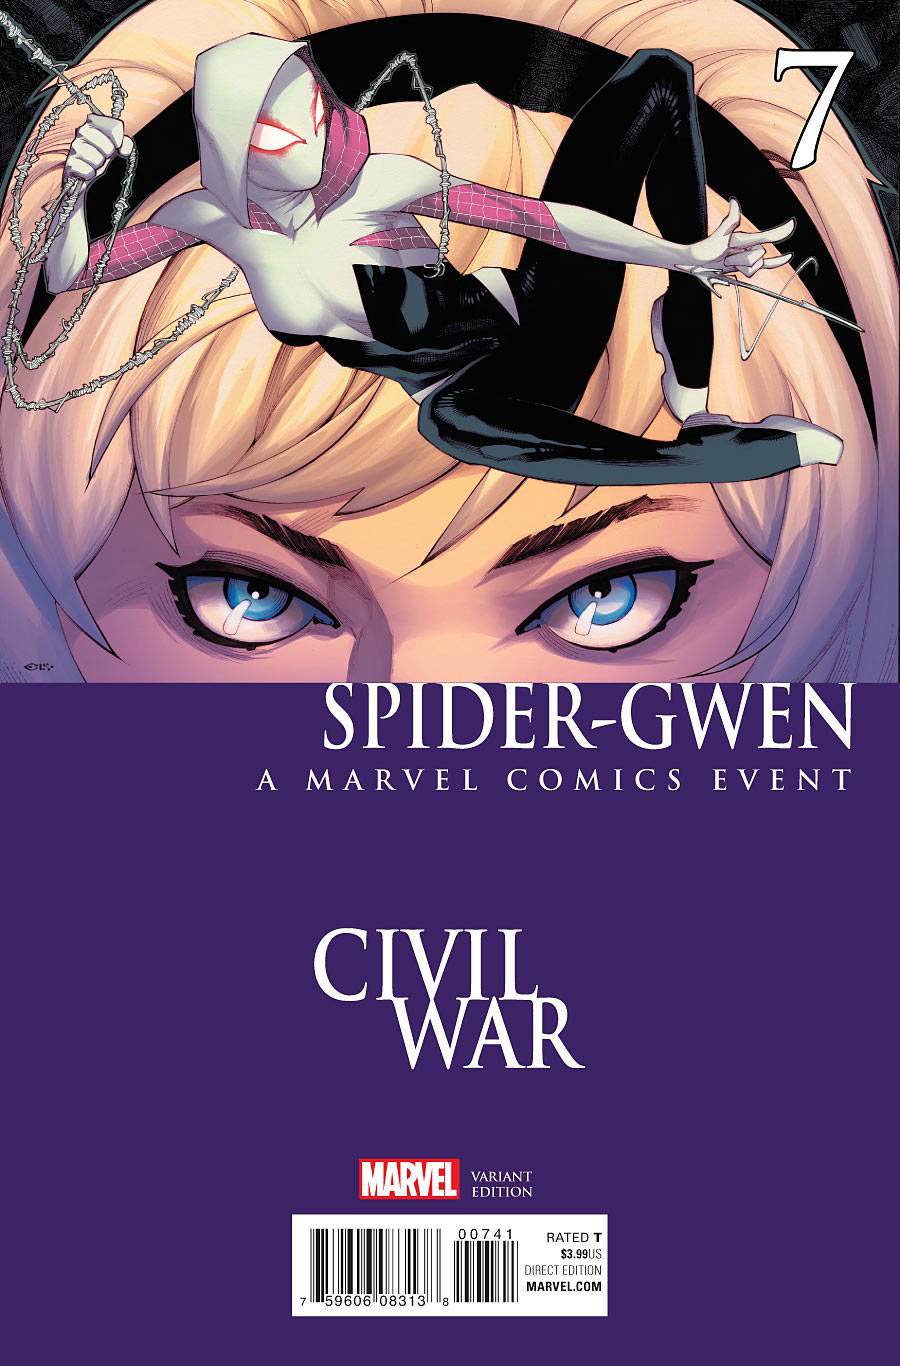 Spider-Gwen Vol 2 #7 Cover D Variant Civil War Cover (Spider-Women Part 2)